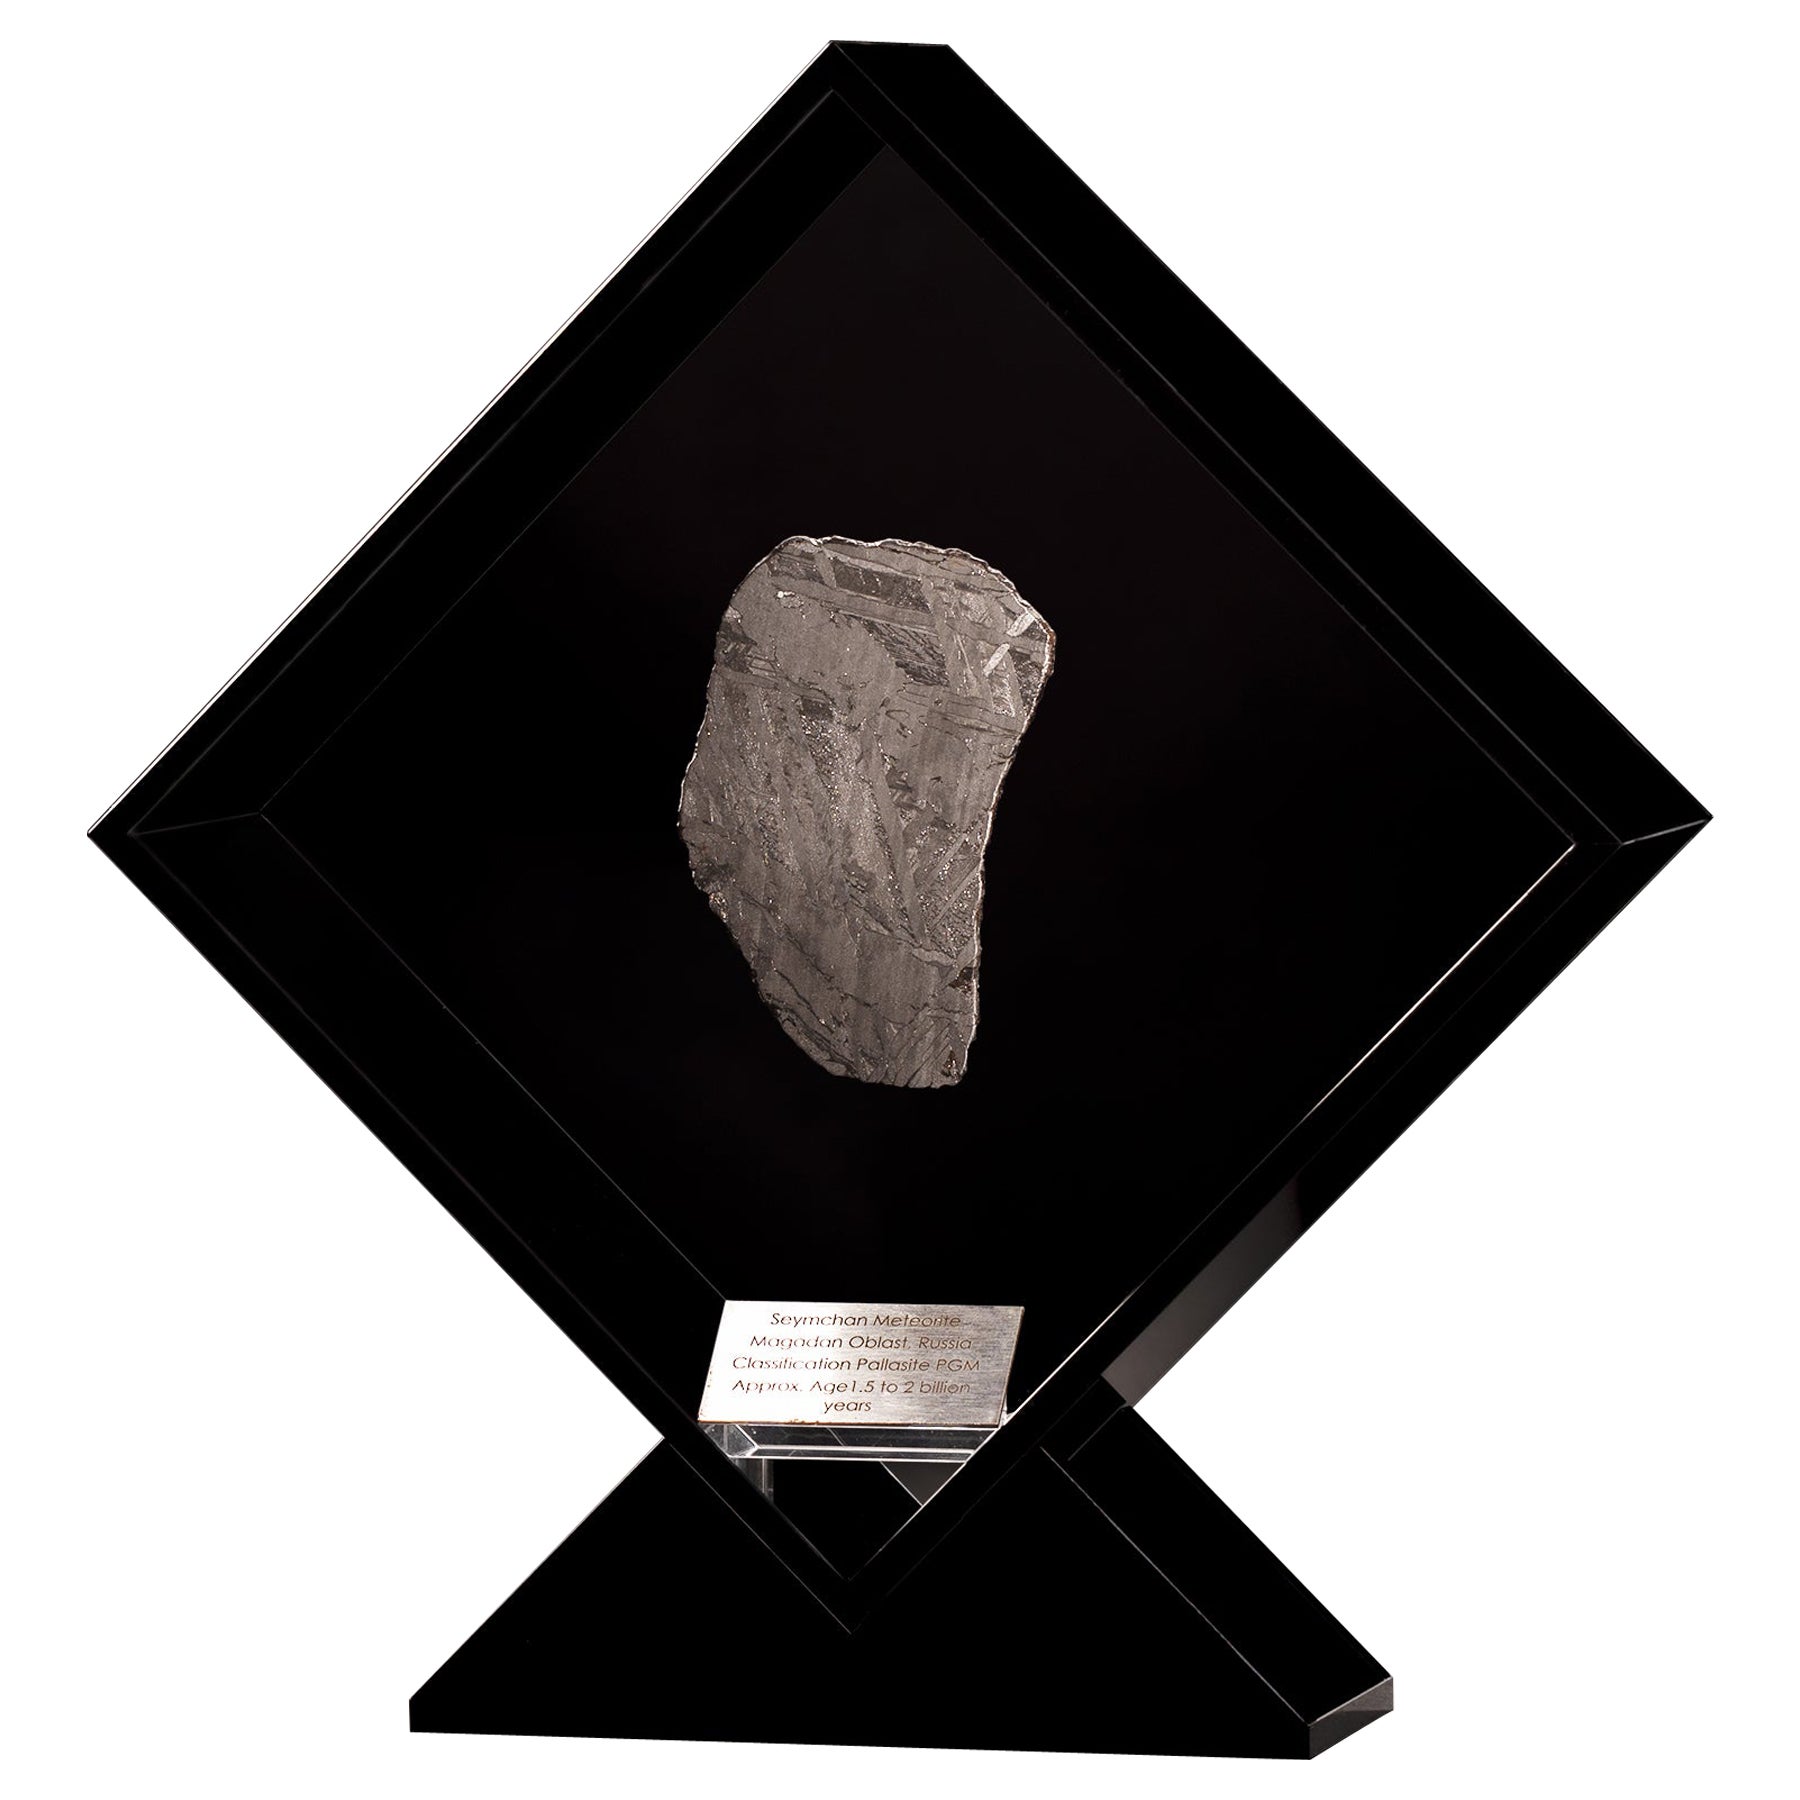 Original Design, Seymchan Meteorite in a Black Acrylic Display For Sale